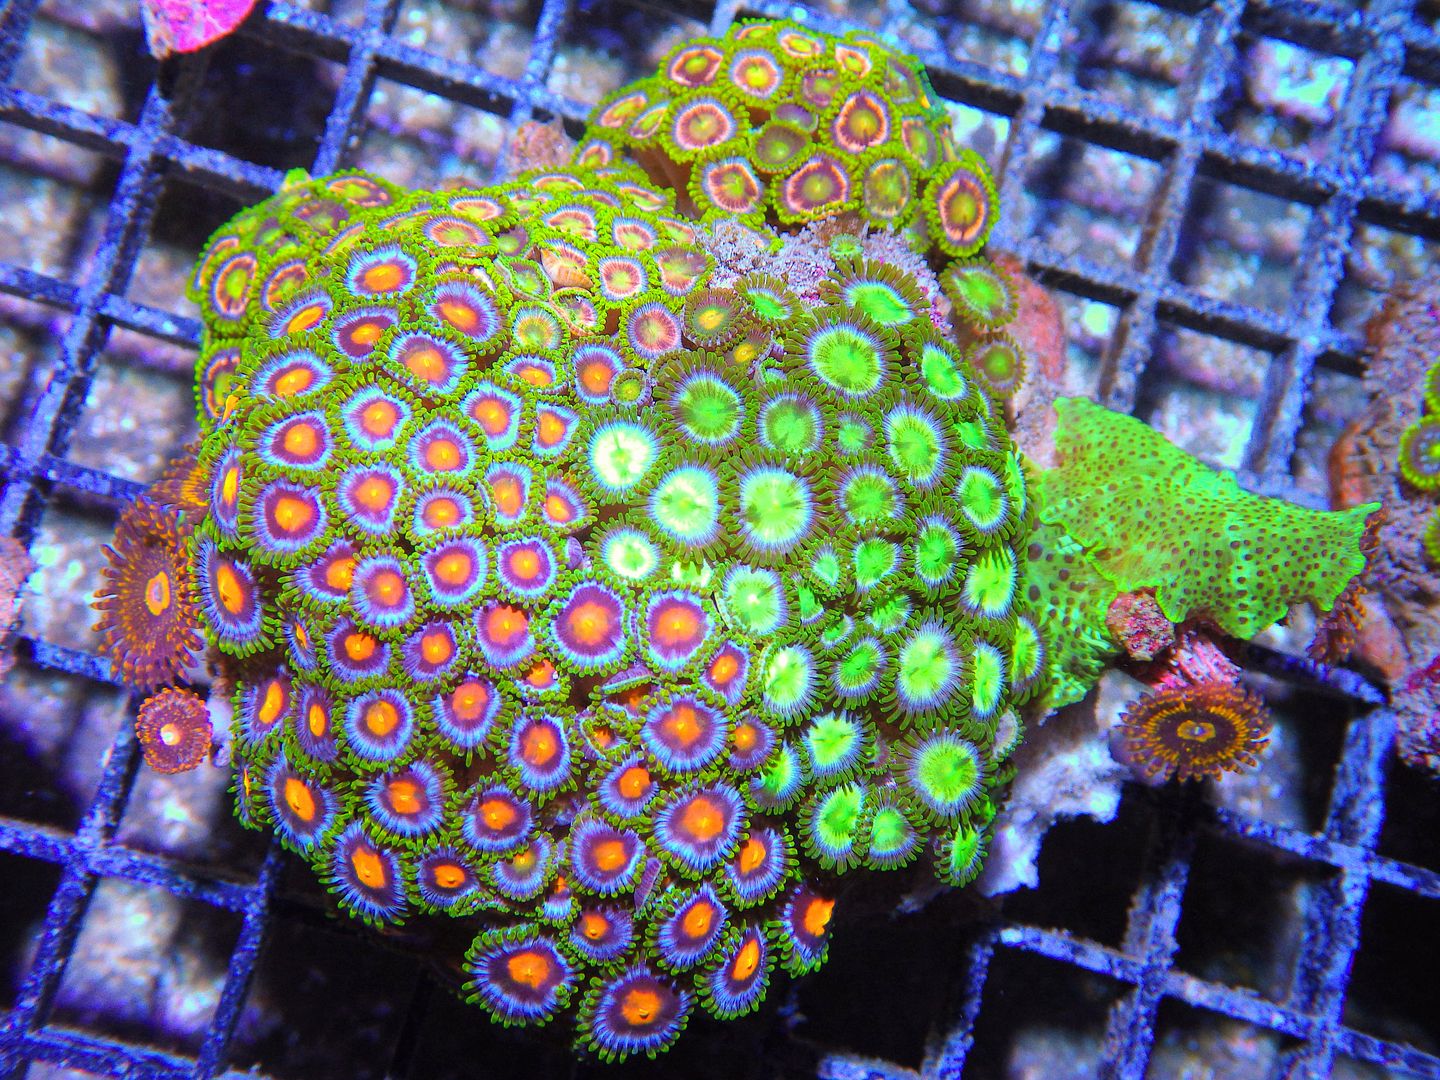 RIMG86062 zpshqntcbhj - New Mushrooms & Pieces of The Reef